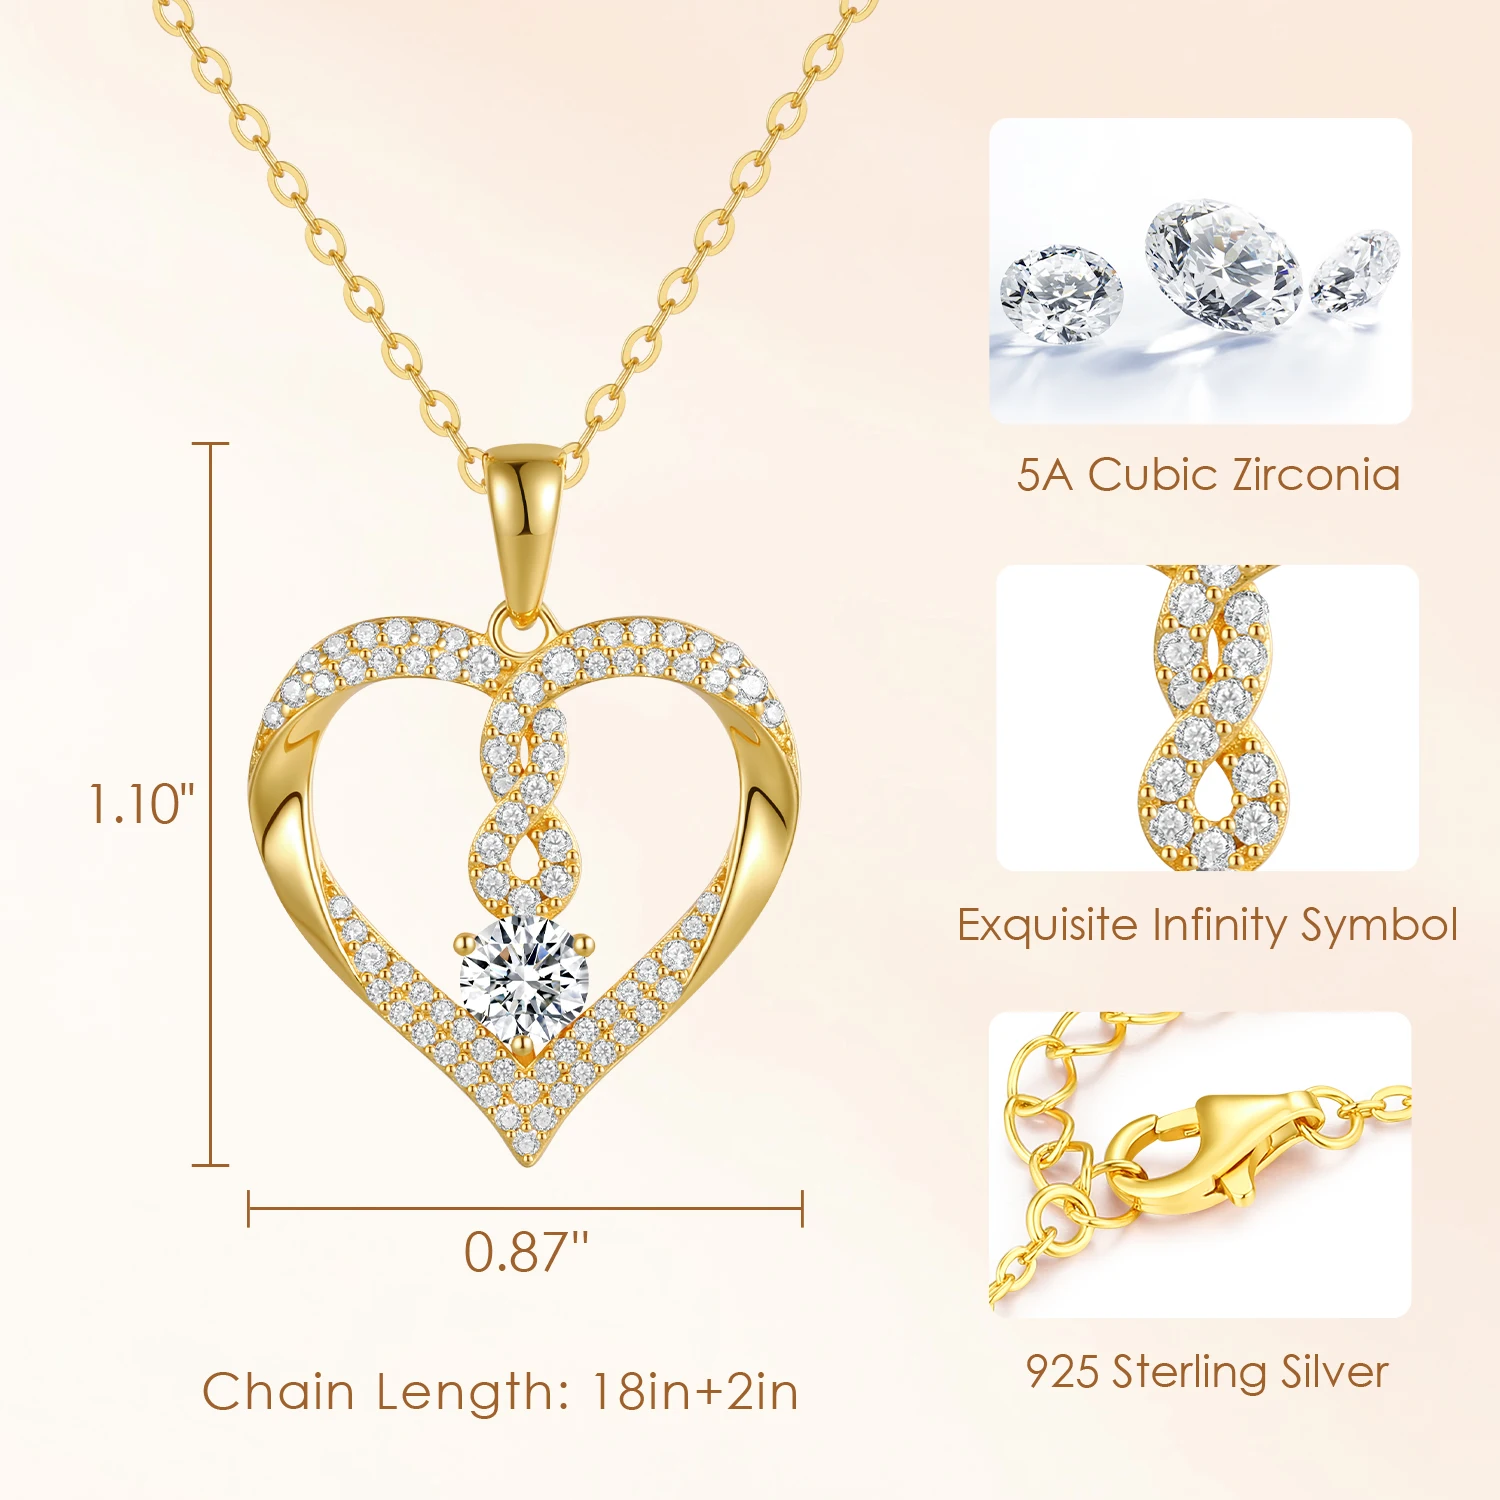 CDE YN0987 Fine Jewelry 925 Sterling Silver Necklace Wholesale Rhodium Plated Chain Zircon Heart Pendant Necklace